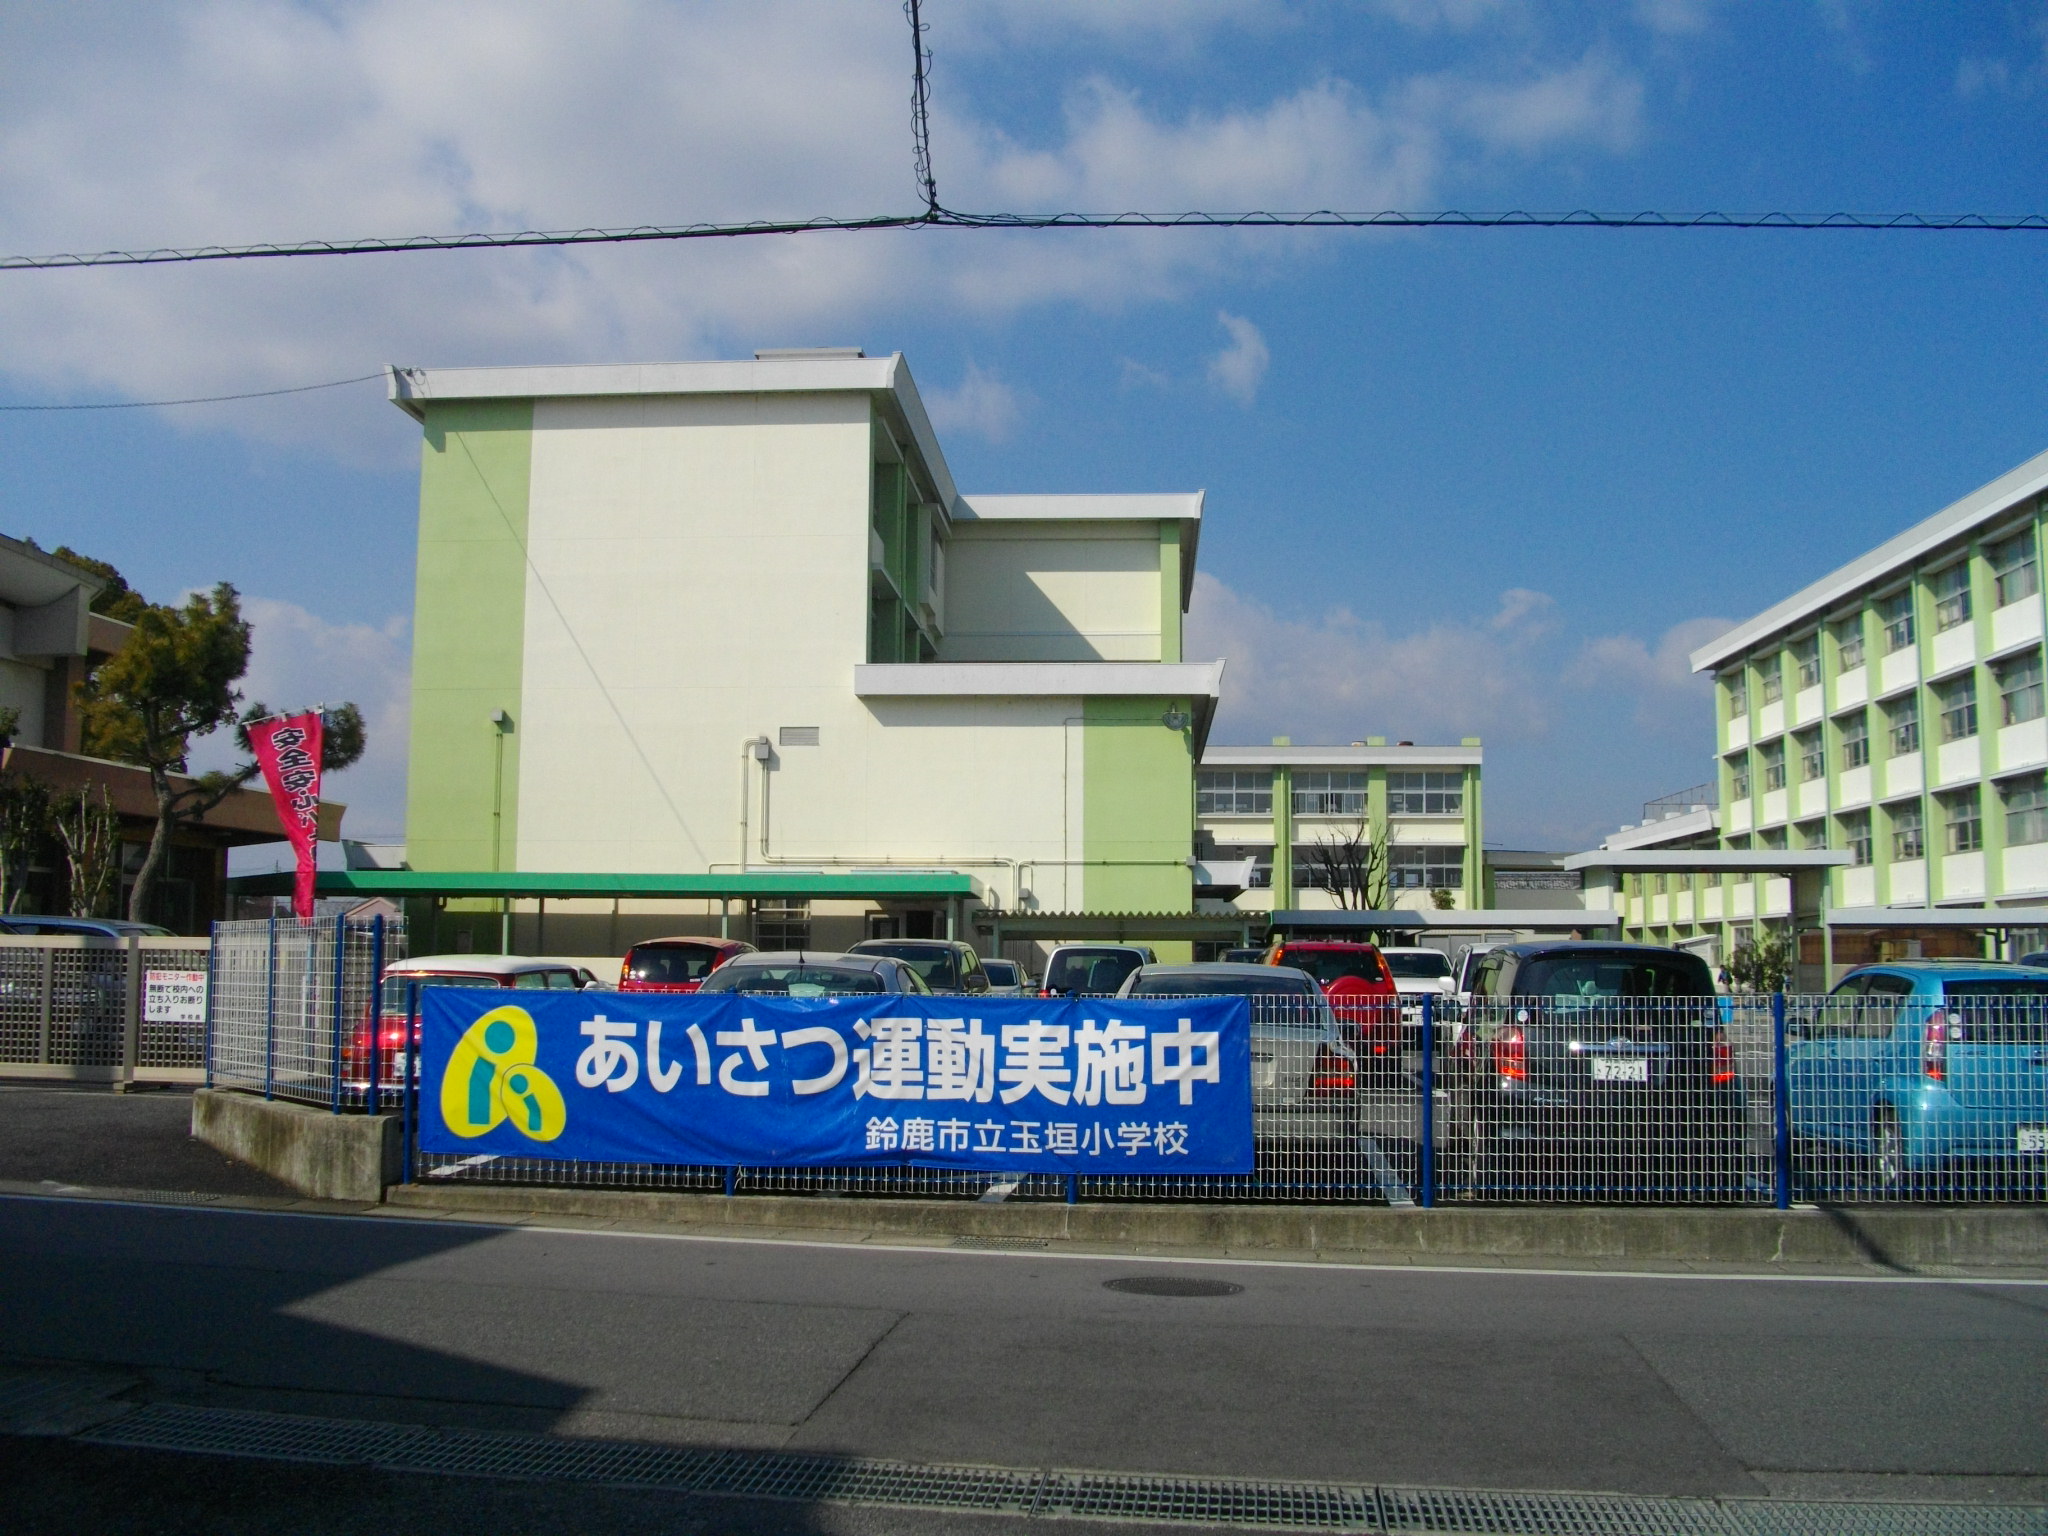 Primary school. Tamagaki up to elementary school (elementary school) 2190m